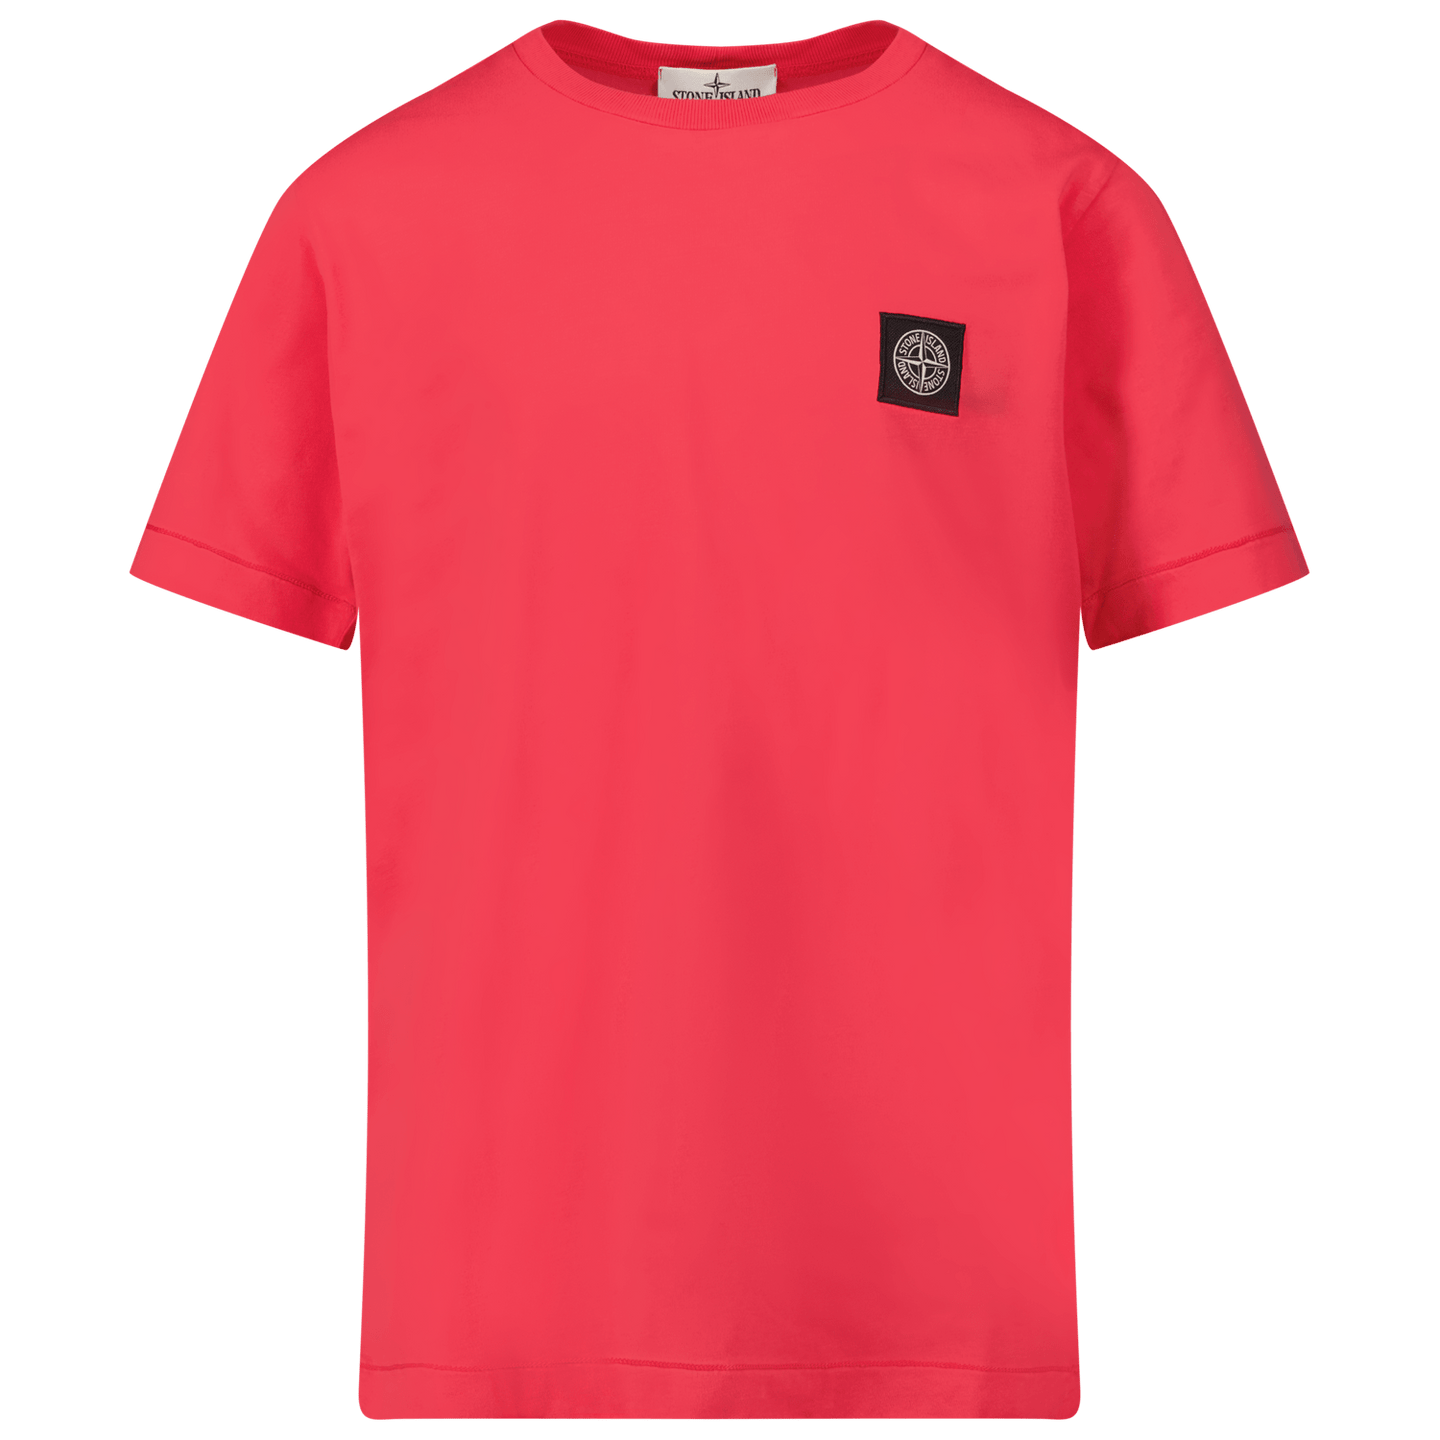 Stone Island Kinder Jongens T-Shirt Rood - Superstellar